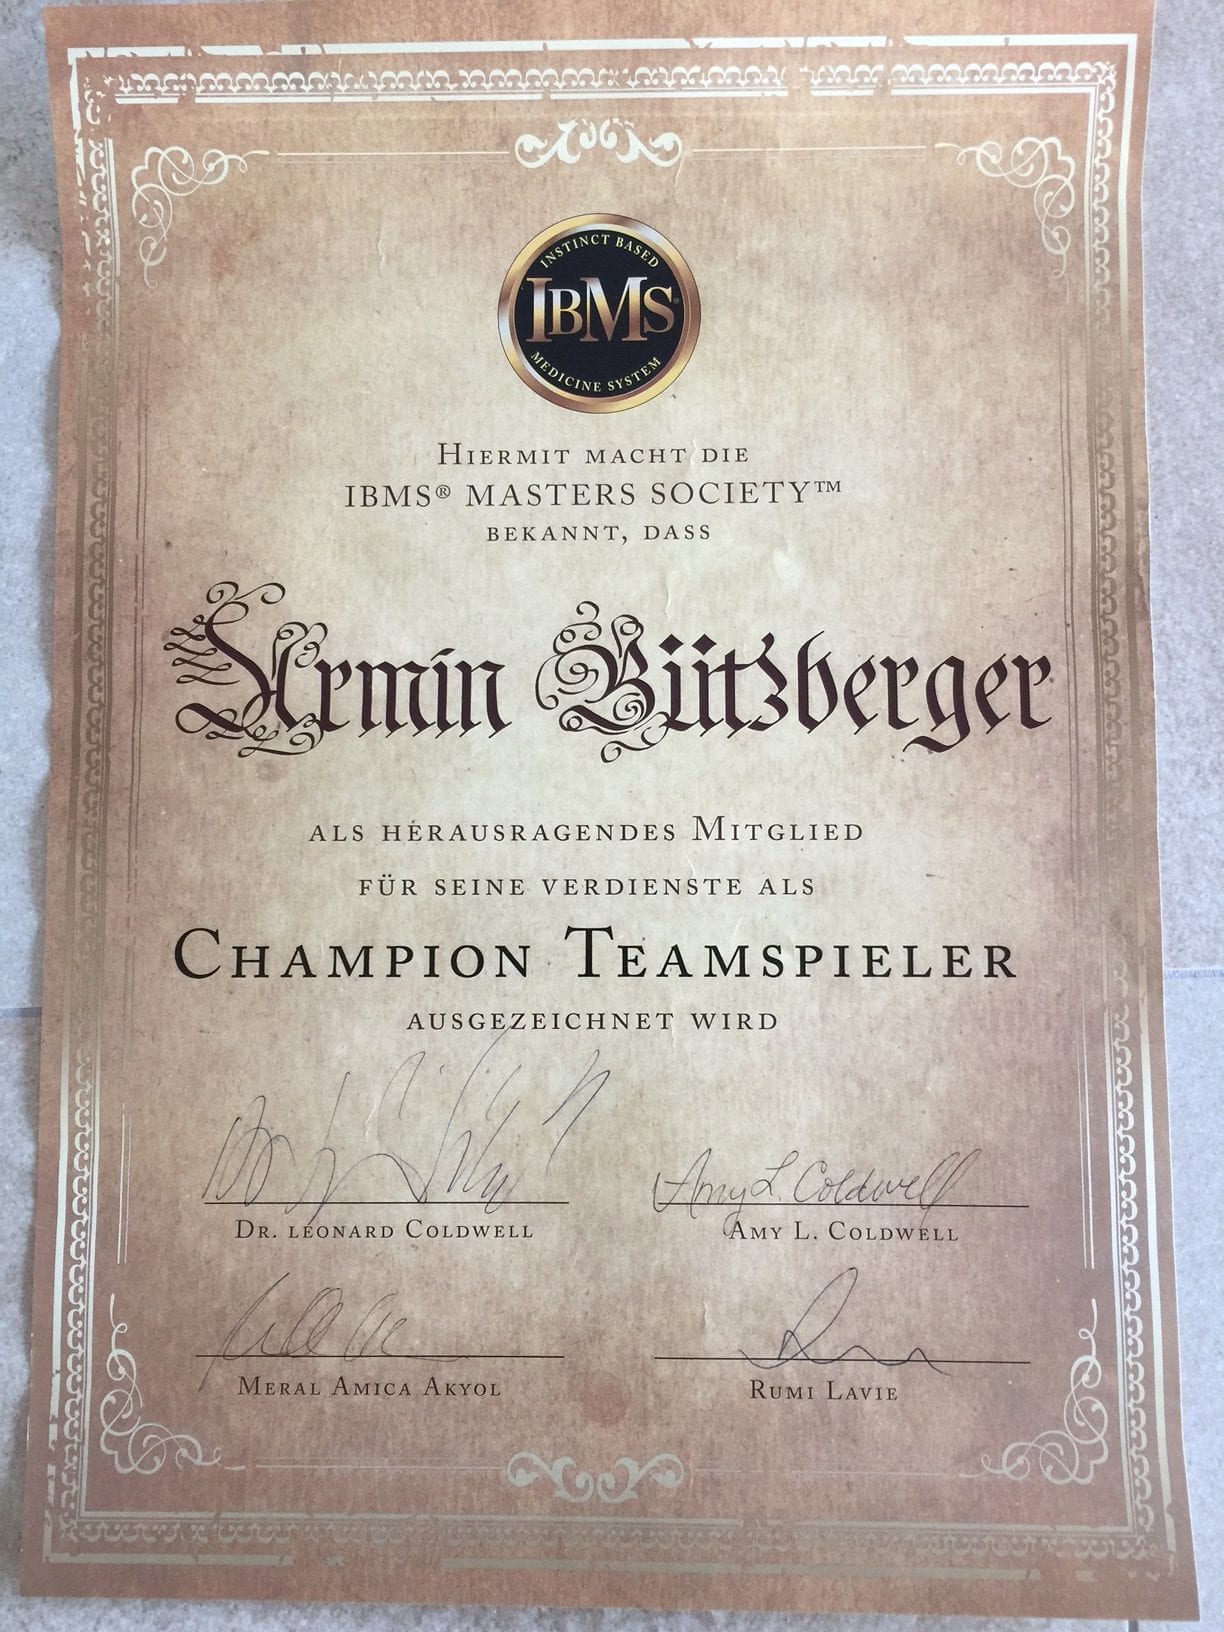 Armin Bützberger, Champion Teamspieler & Masters Society Mitglied